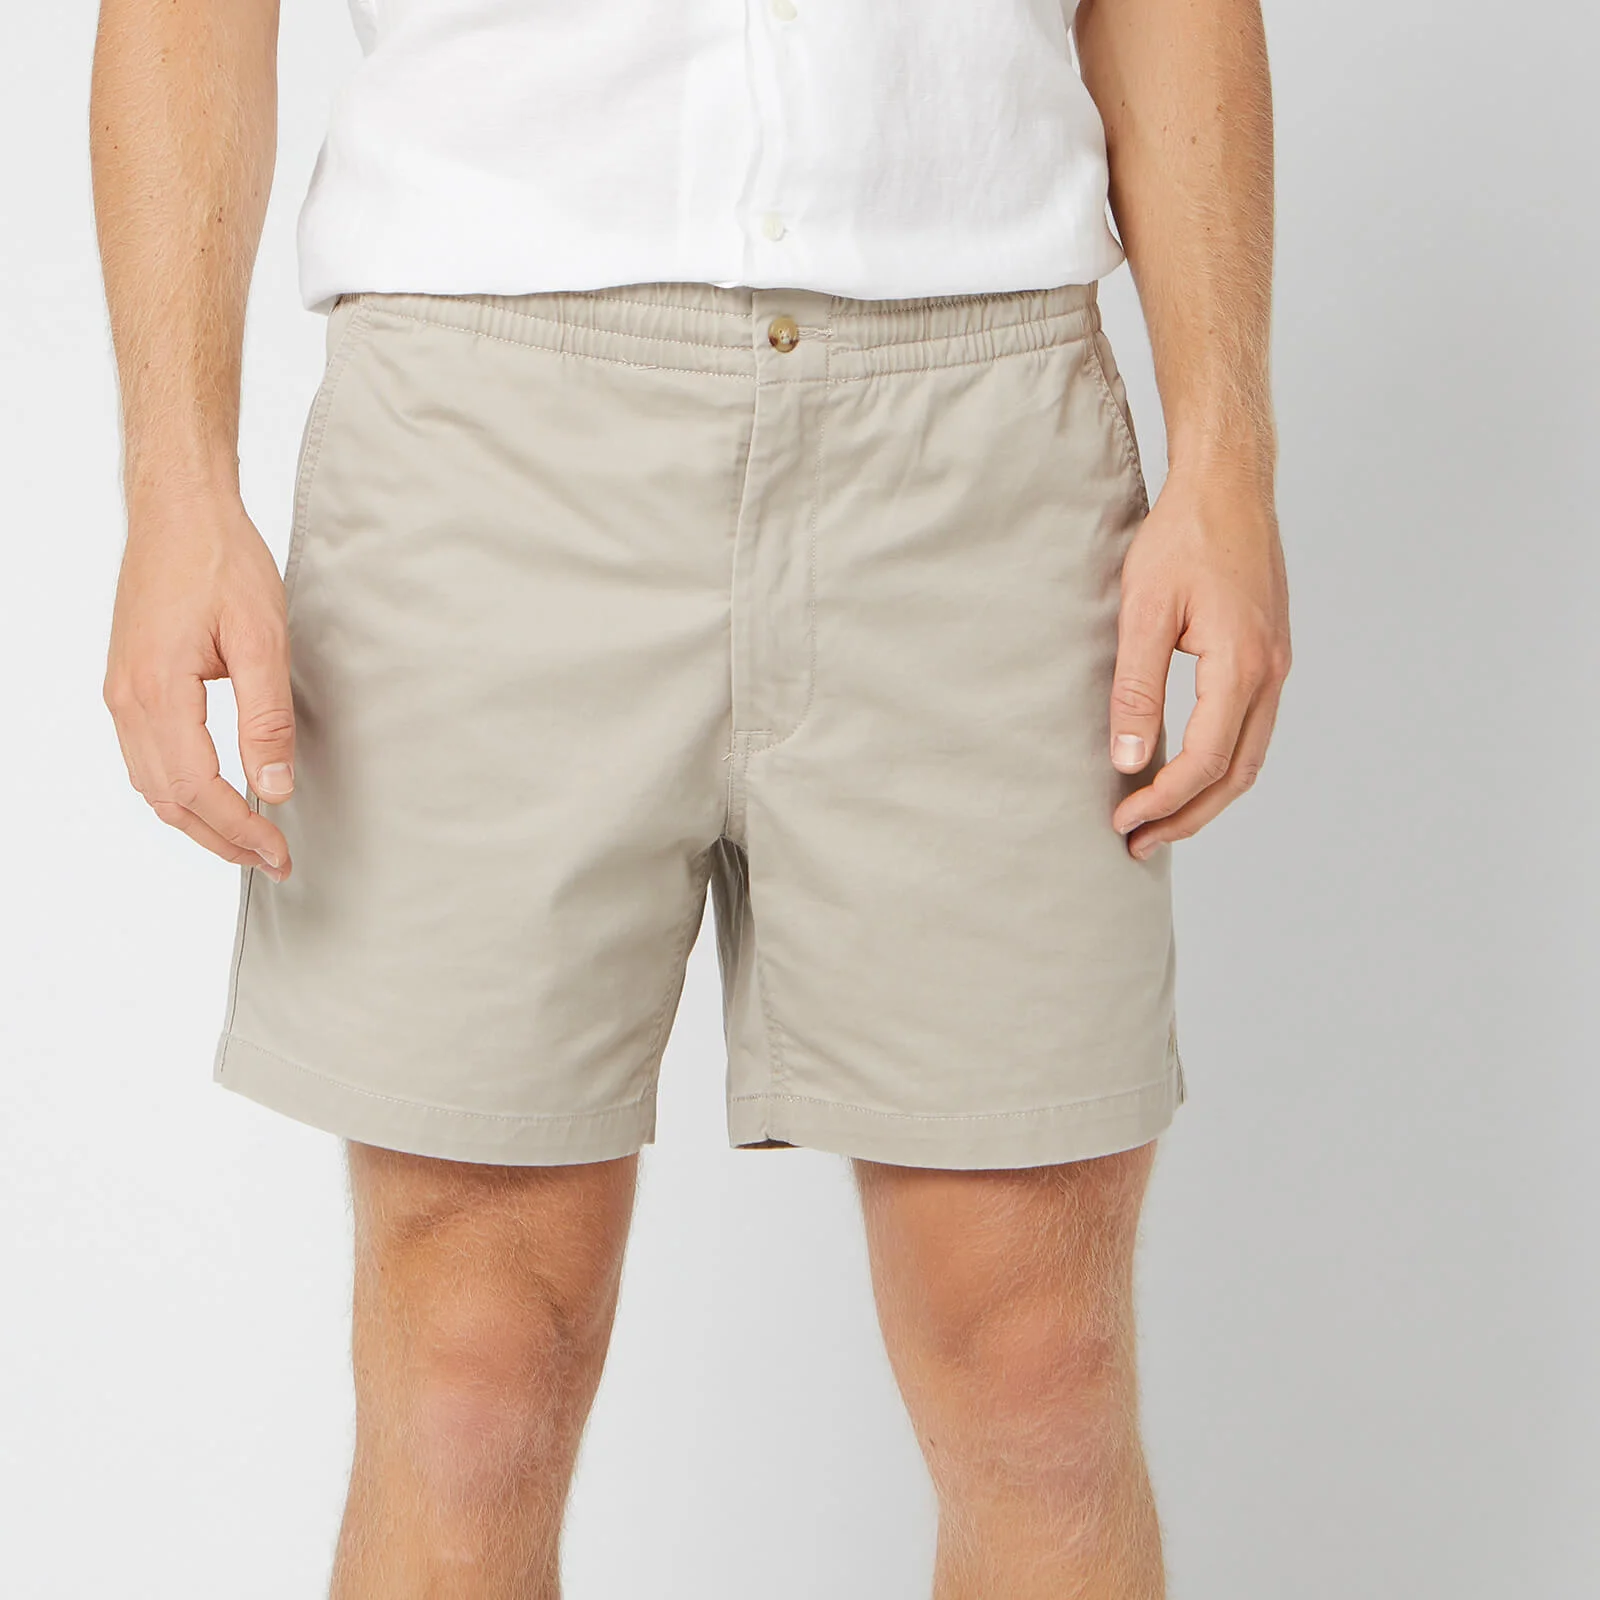 Polo Ralph Lauren Men's Classic Fit Prepster Shorts - Khaki Tan Image 1